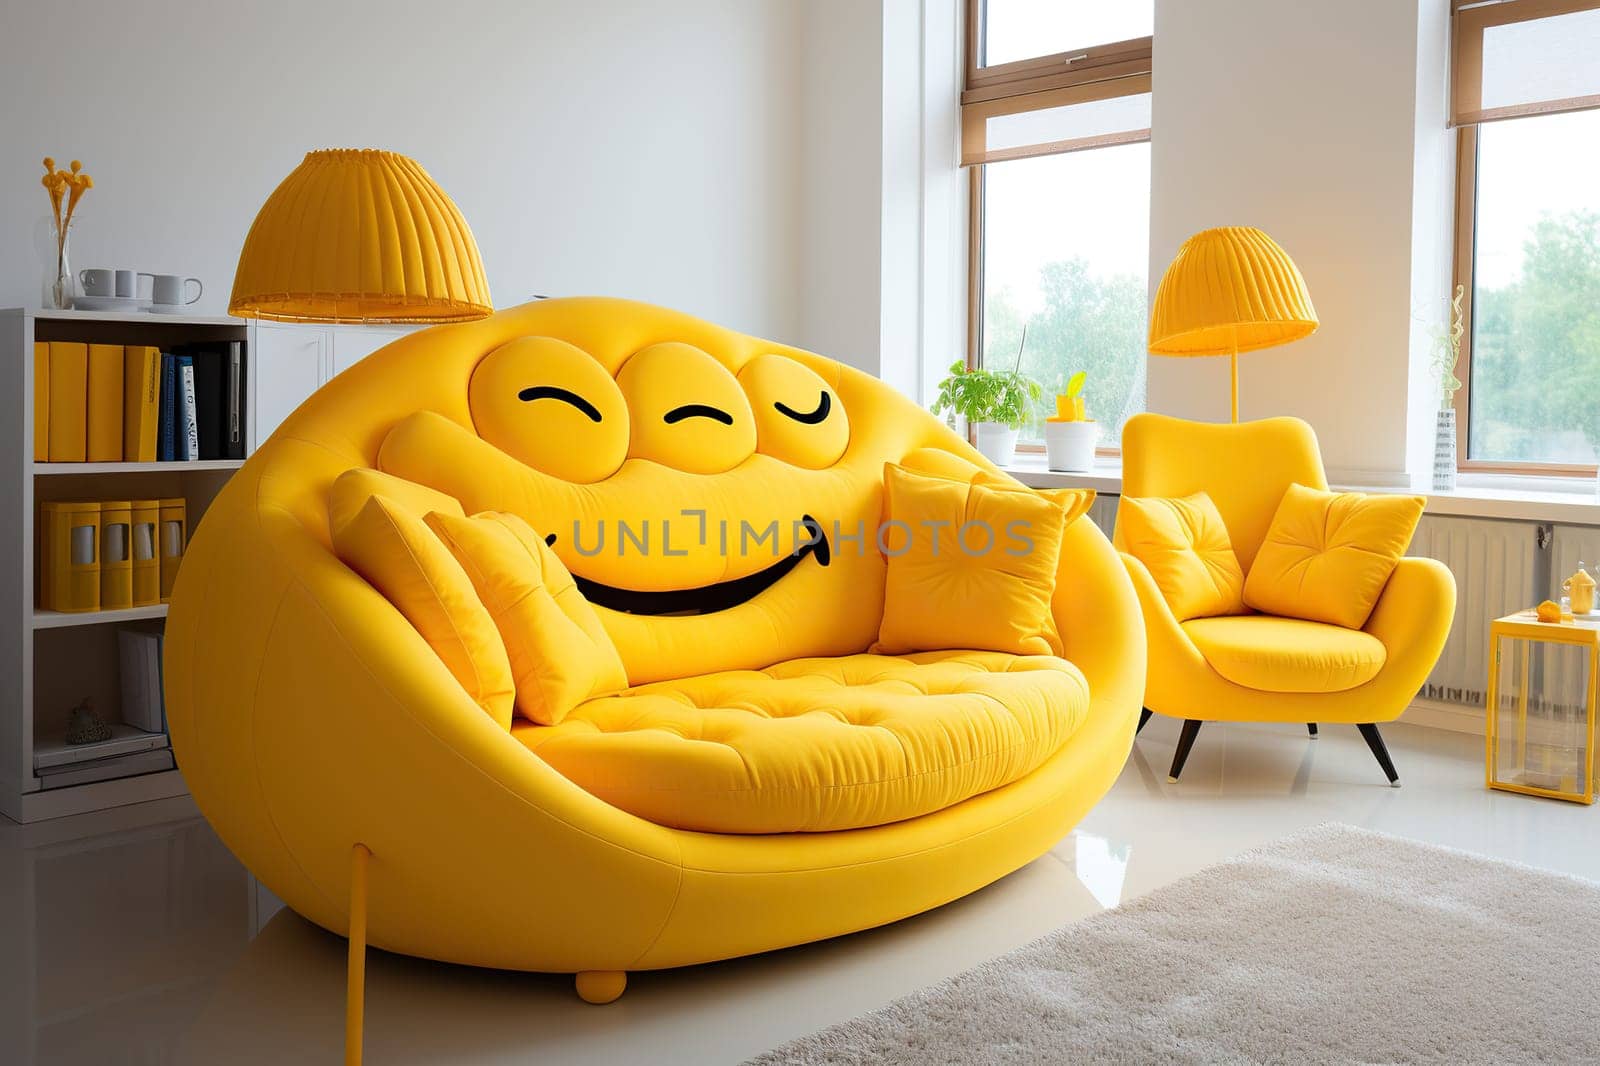 Yellow designer stylish sofa in the interior of a bright room.